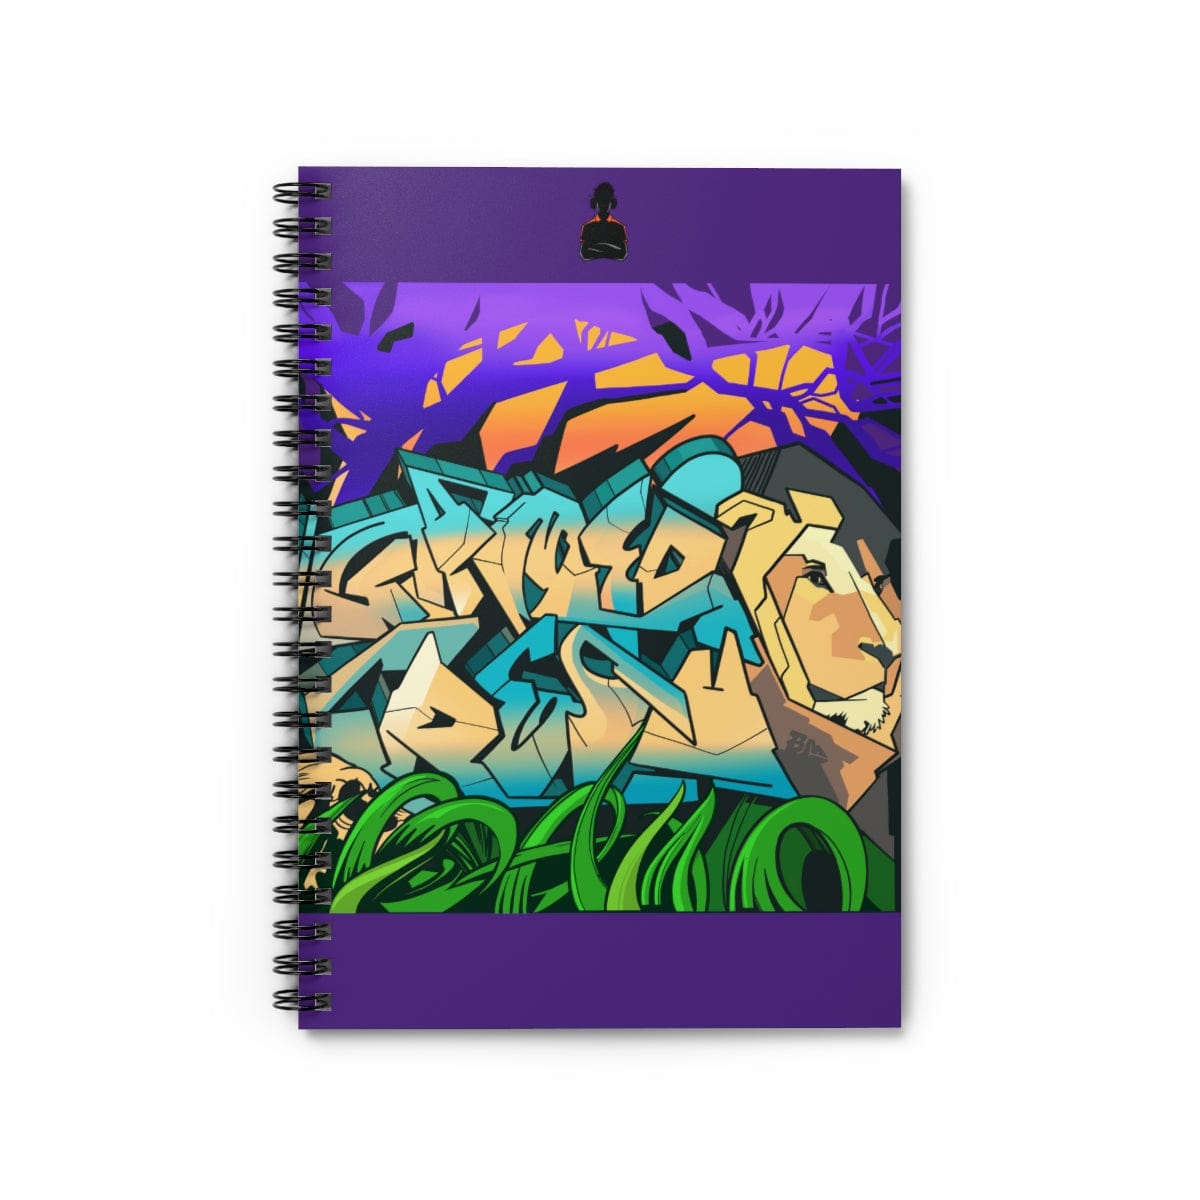 The Gamer Fresh Graffiti | Streamer All Art Lion NYC Mural | Royal Purple Spiral Notebook - Ruled Line